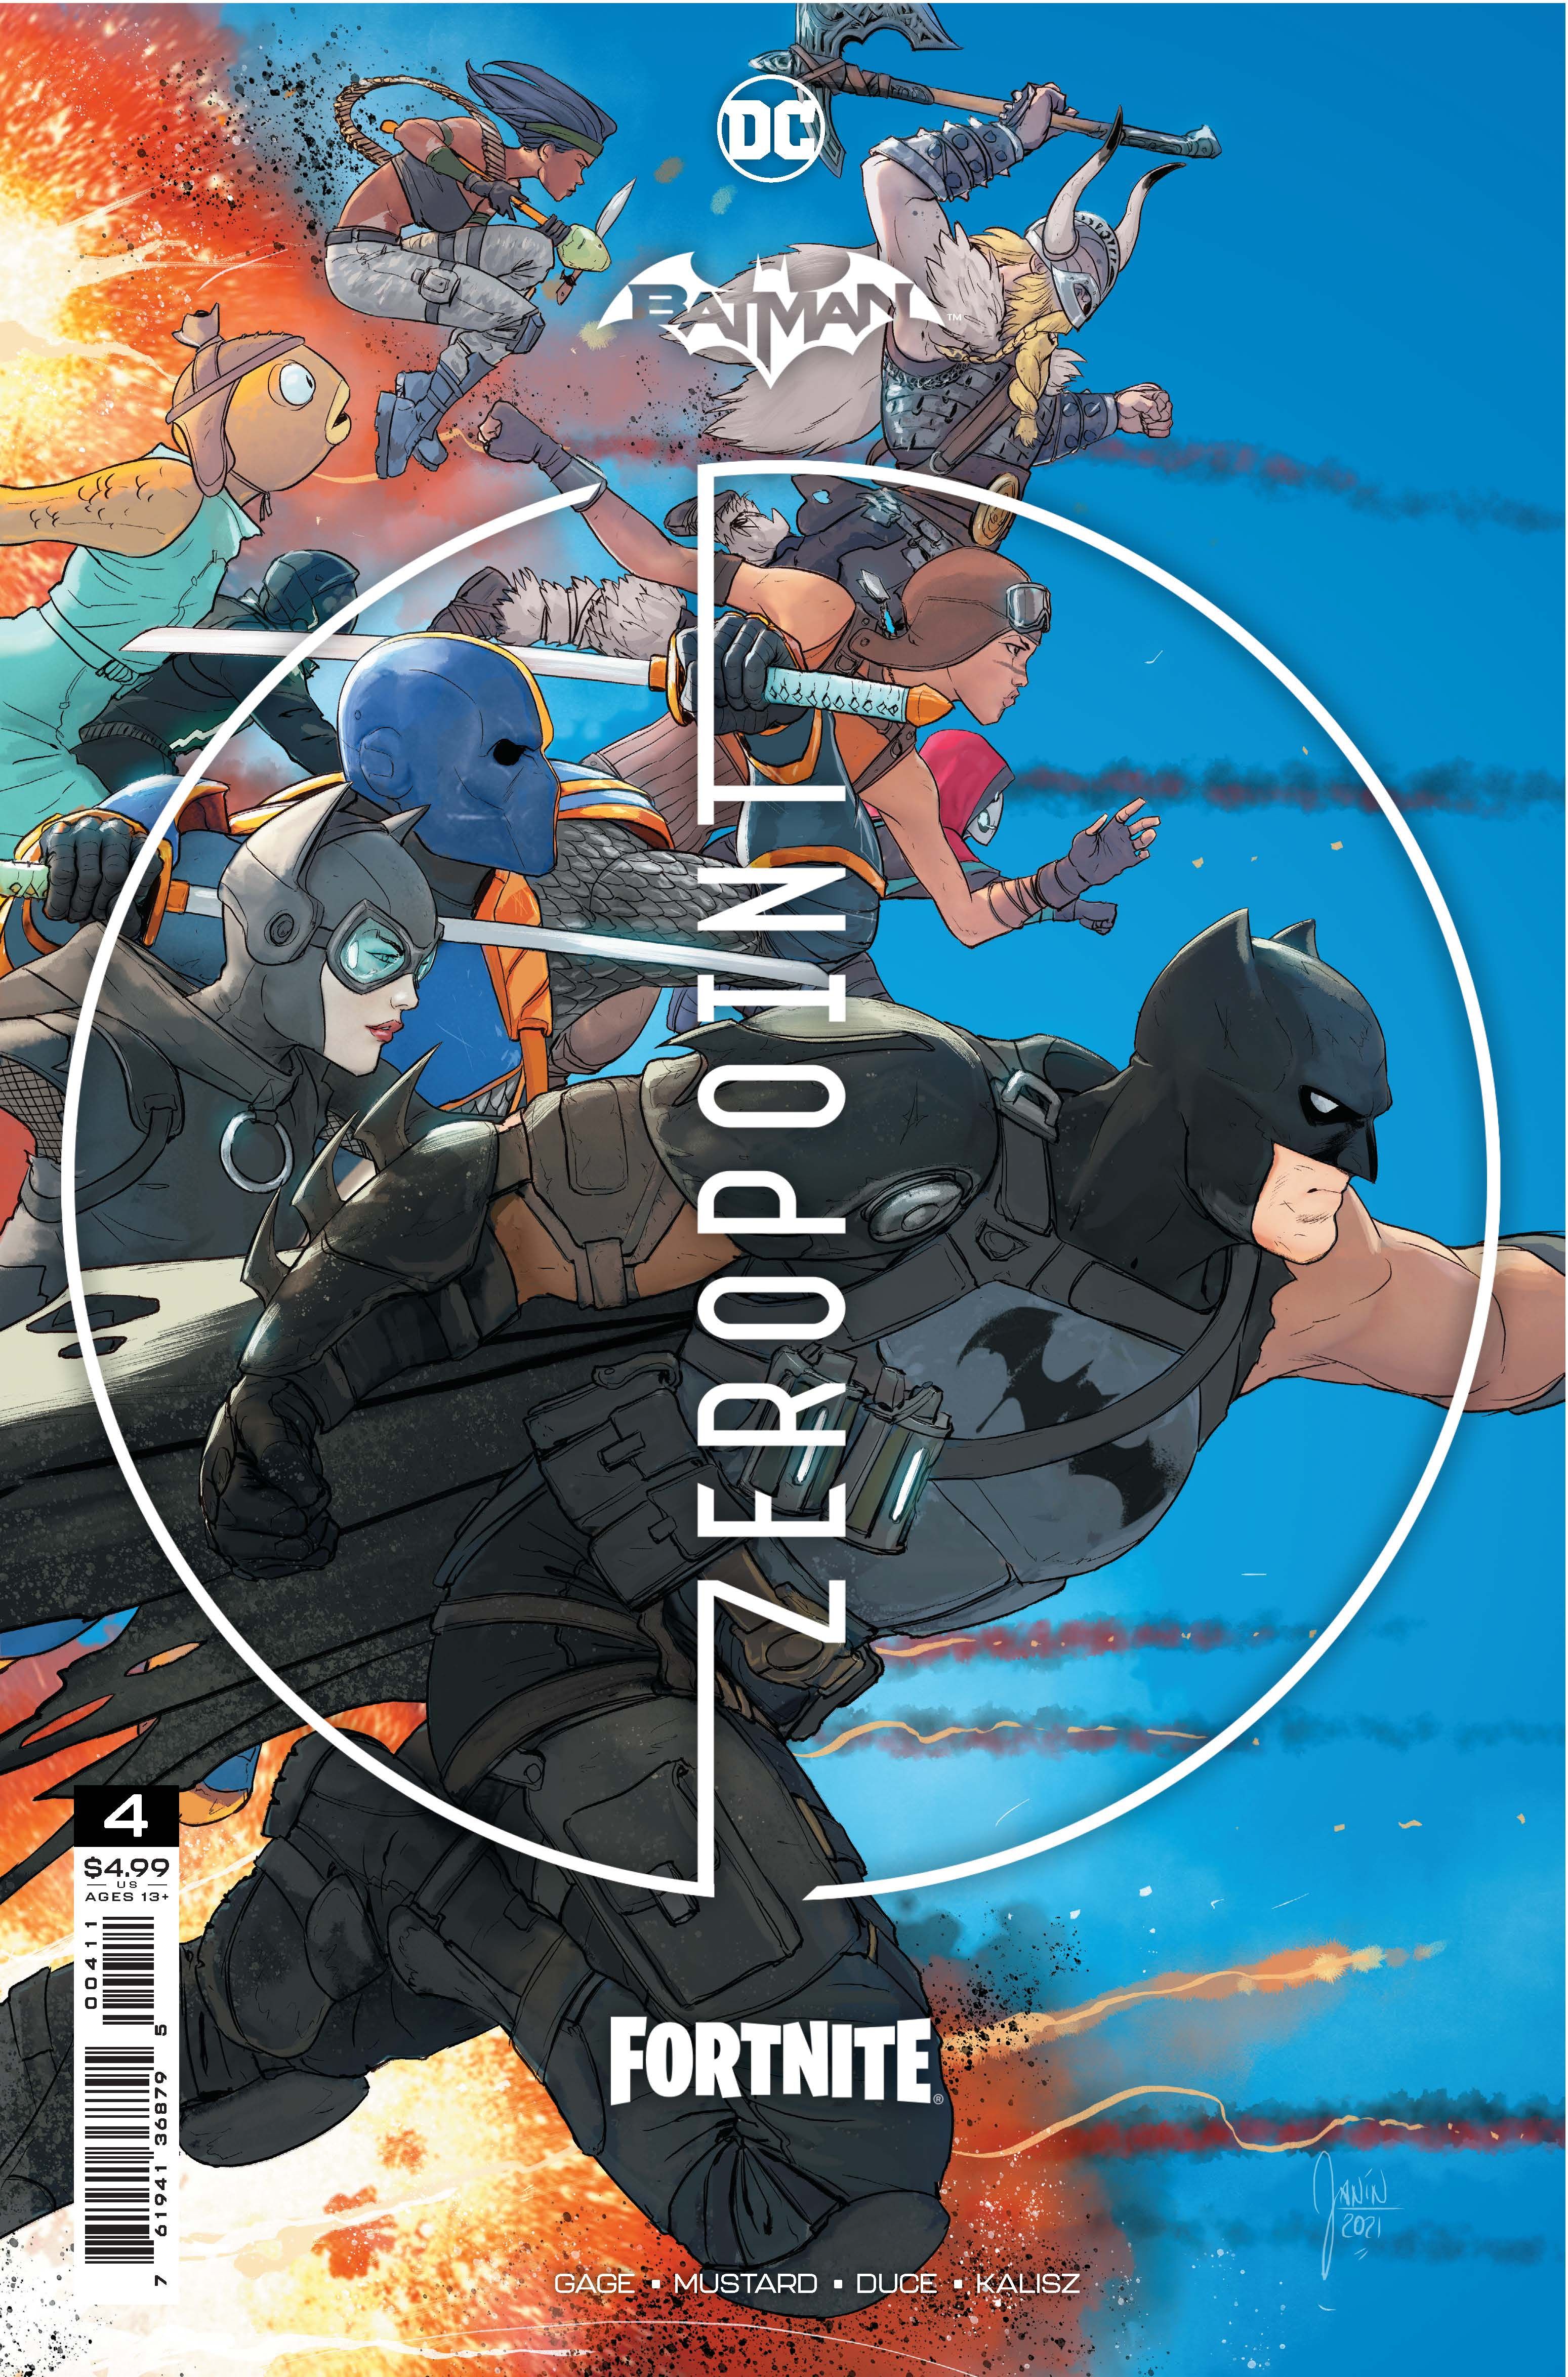 BATMAN FORTNITE ZERO POINT #1 9.4 NM 1ST PRINT COVER A DC COMICS SEALED w/ CODE